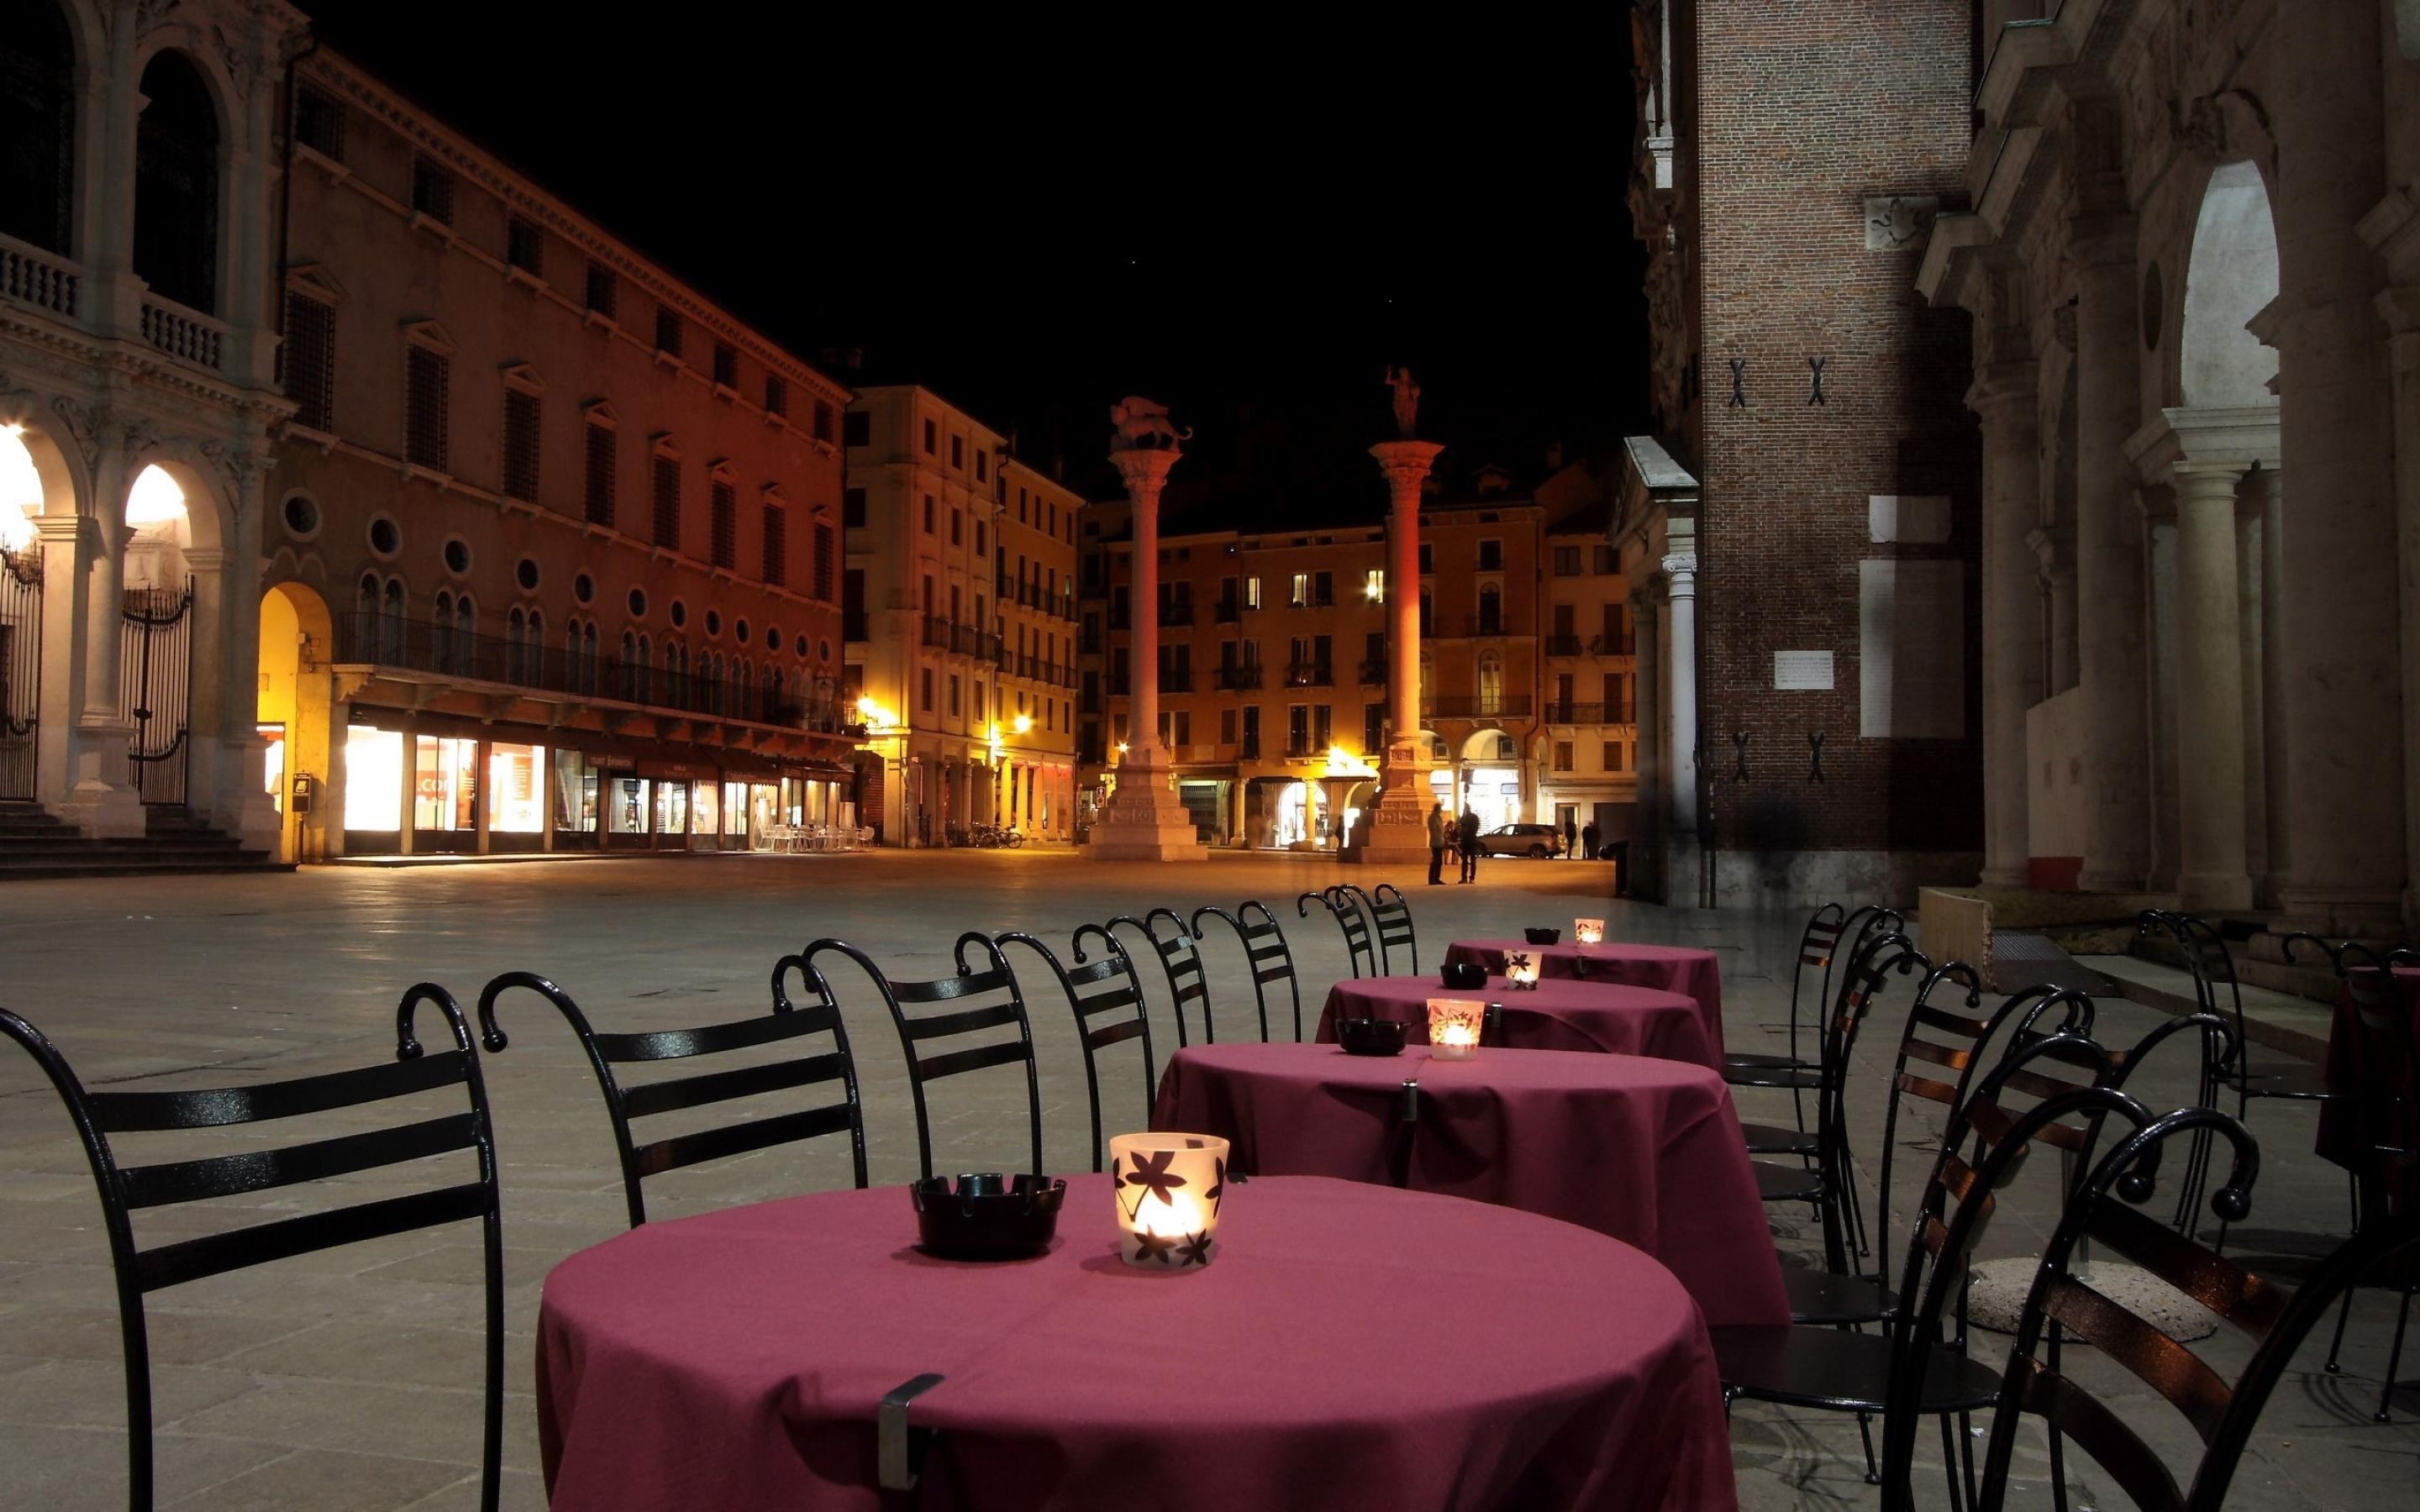 Обои на стол на улице. Ночное кафе на улице. Красивые кафе на улице. Уличное кафе. Уличное кафе Италия.